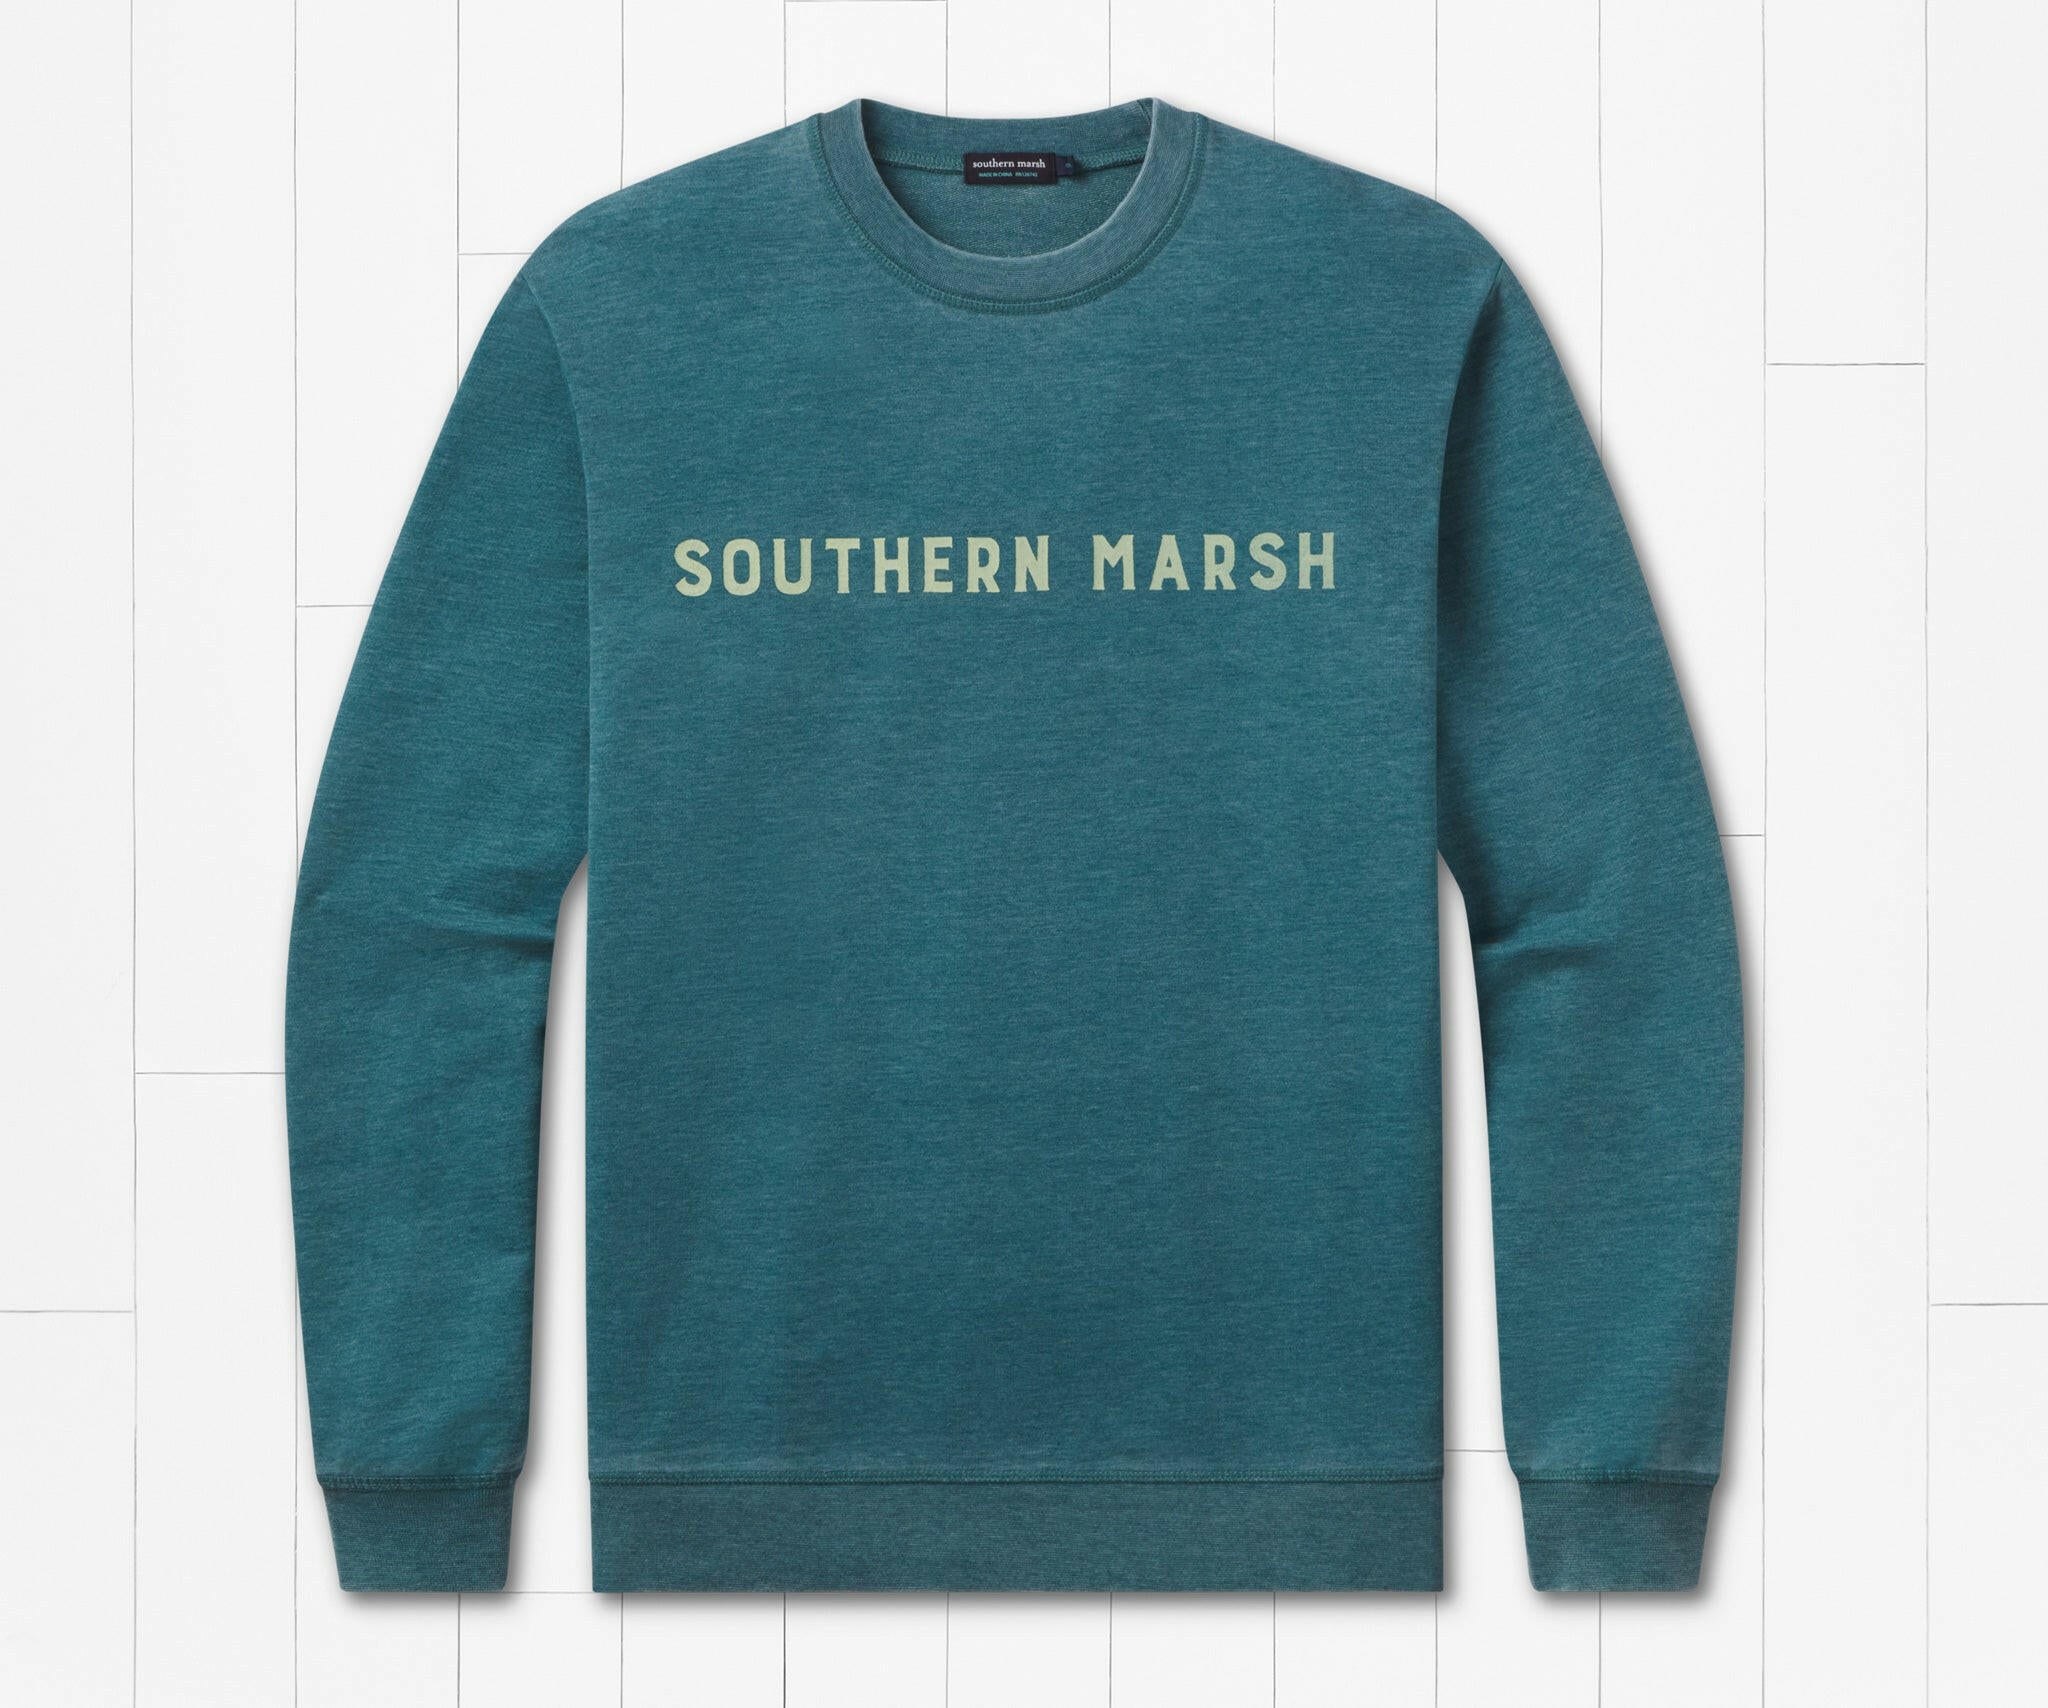 Hatteras Seawash Sweatshirt